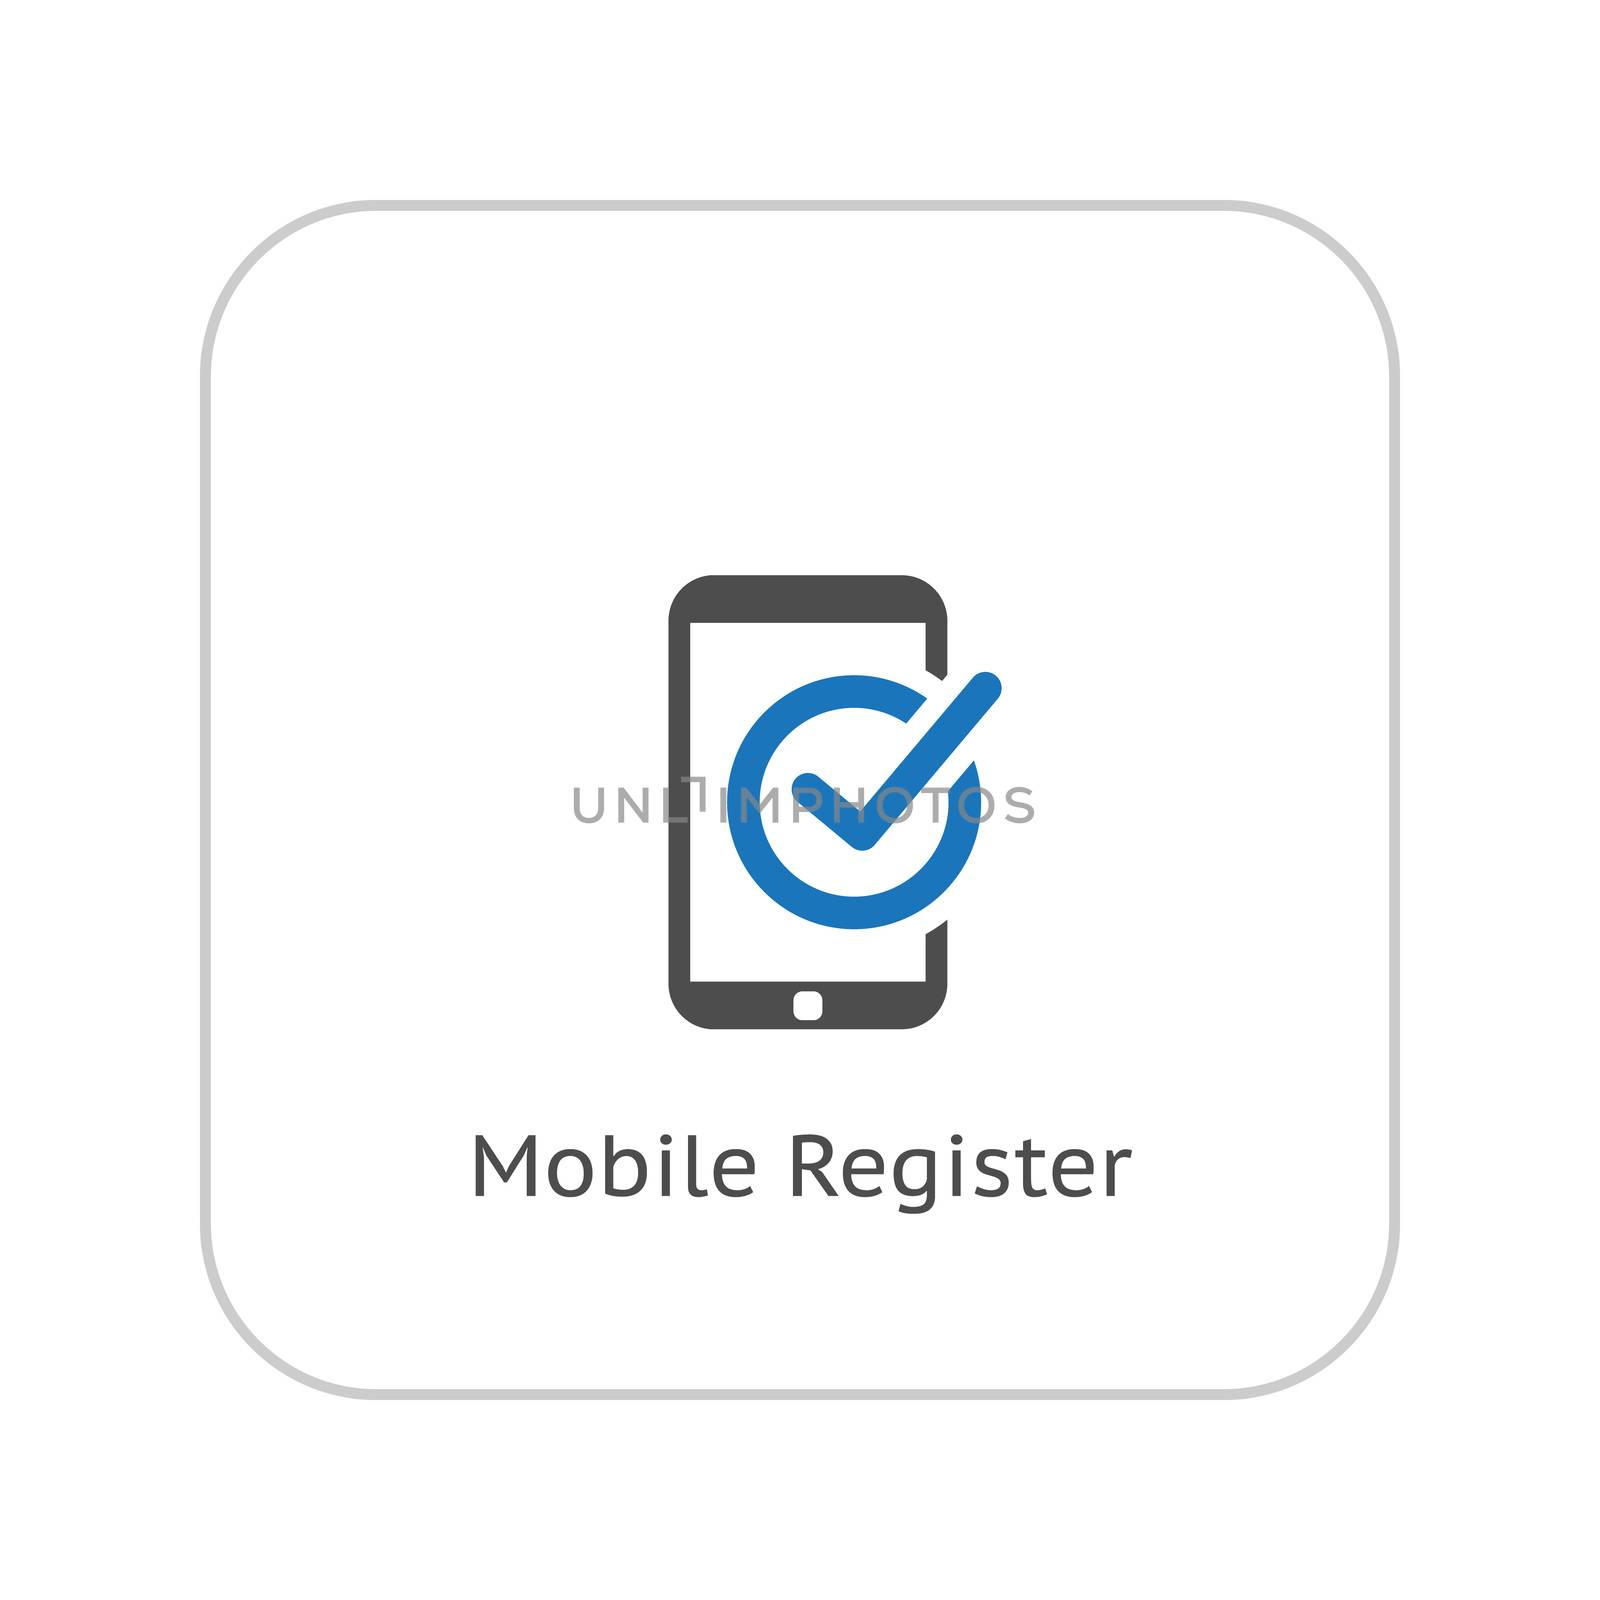 Mobile Register Icon. Online Learning. Flat Design. Isolated Illustration.